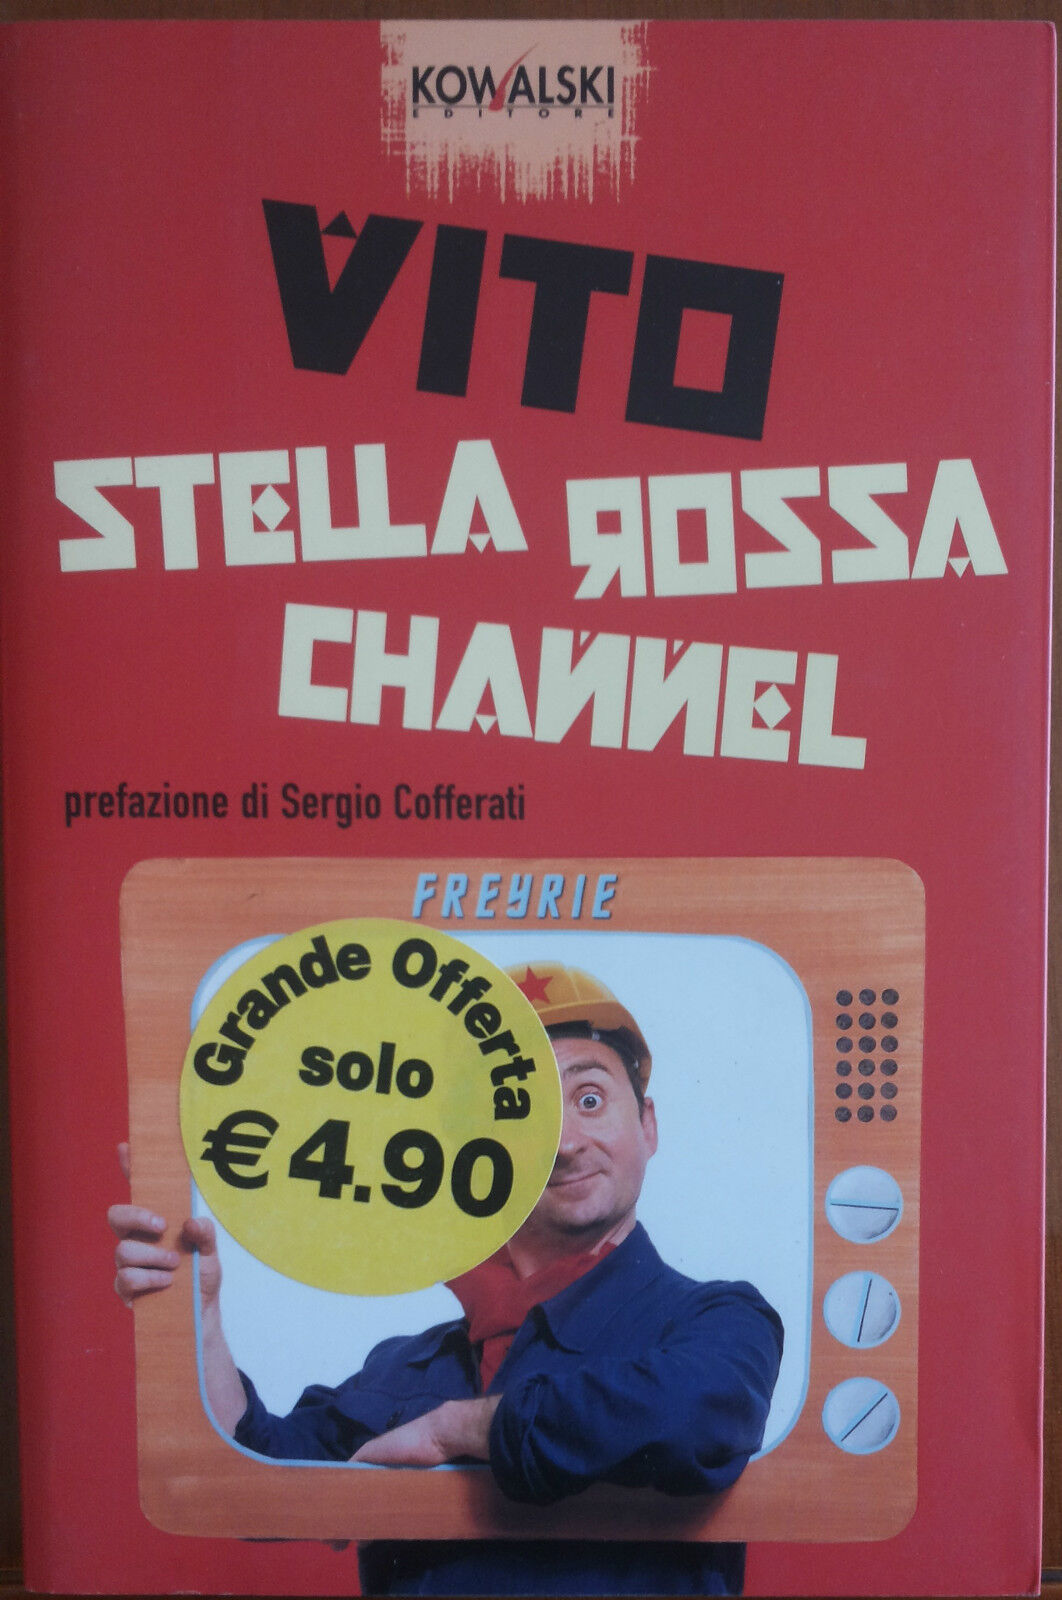 Stella rossa channel - Francesco Freyrie,Vito - Kowalski,2005 - A